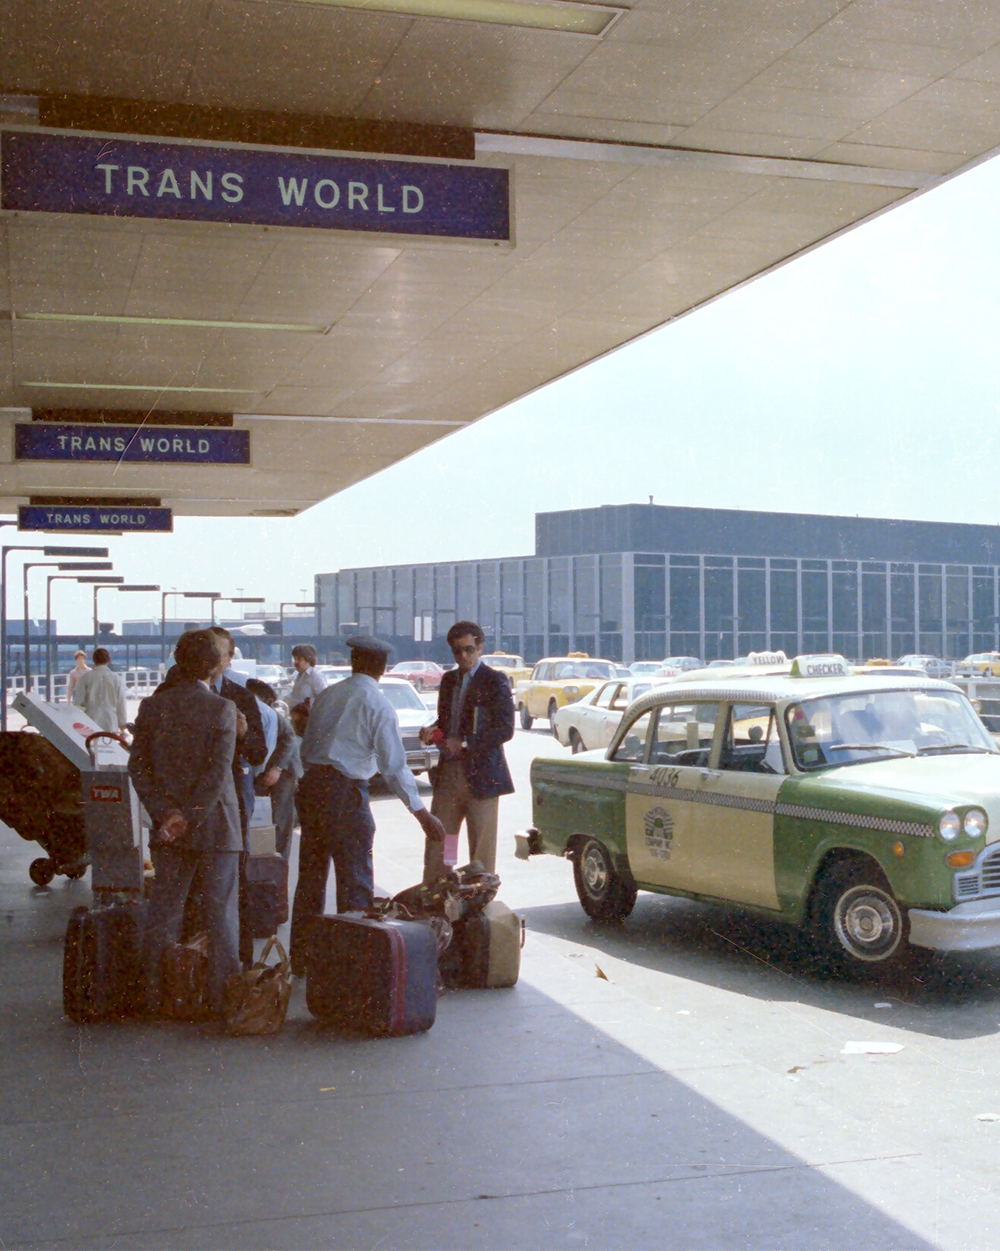 HCSC- travelers unloading luggage at airport. 